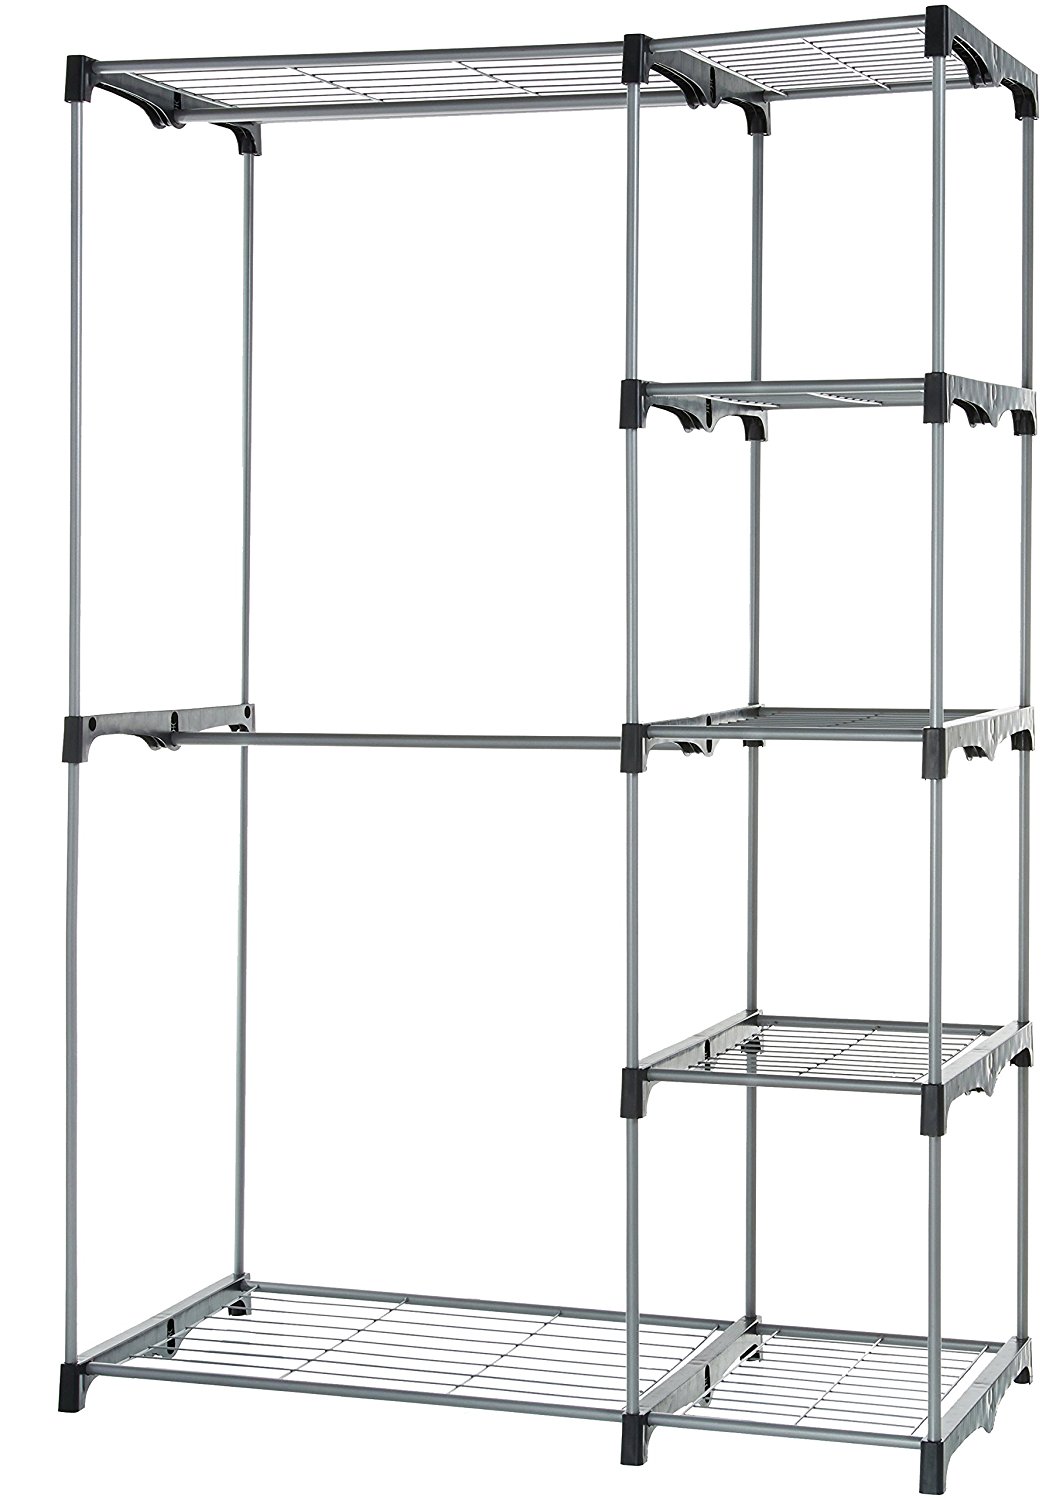 AmazonBasics double rod free standing closet for $30